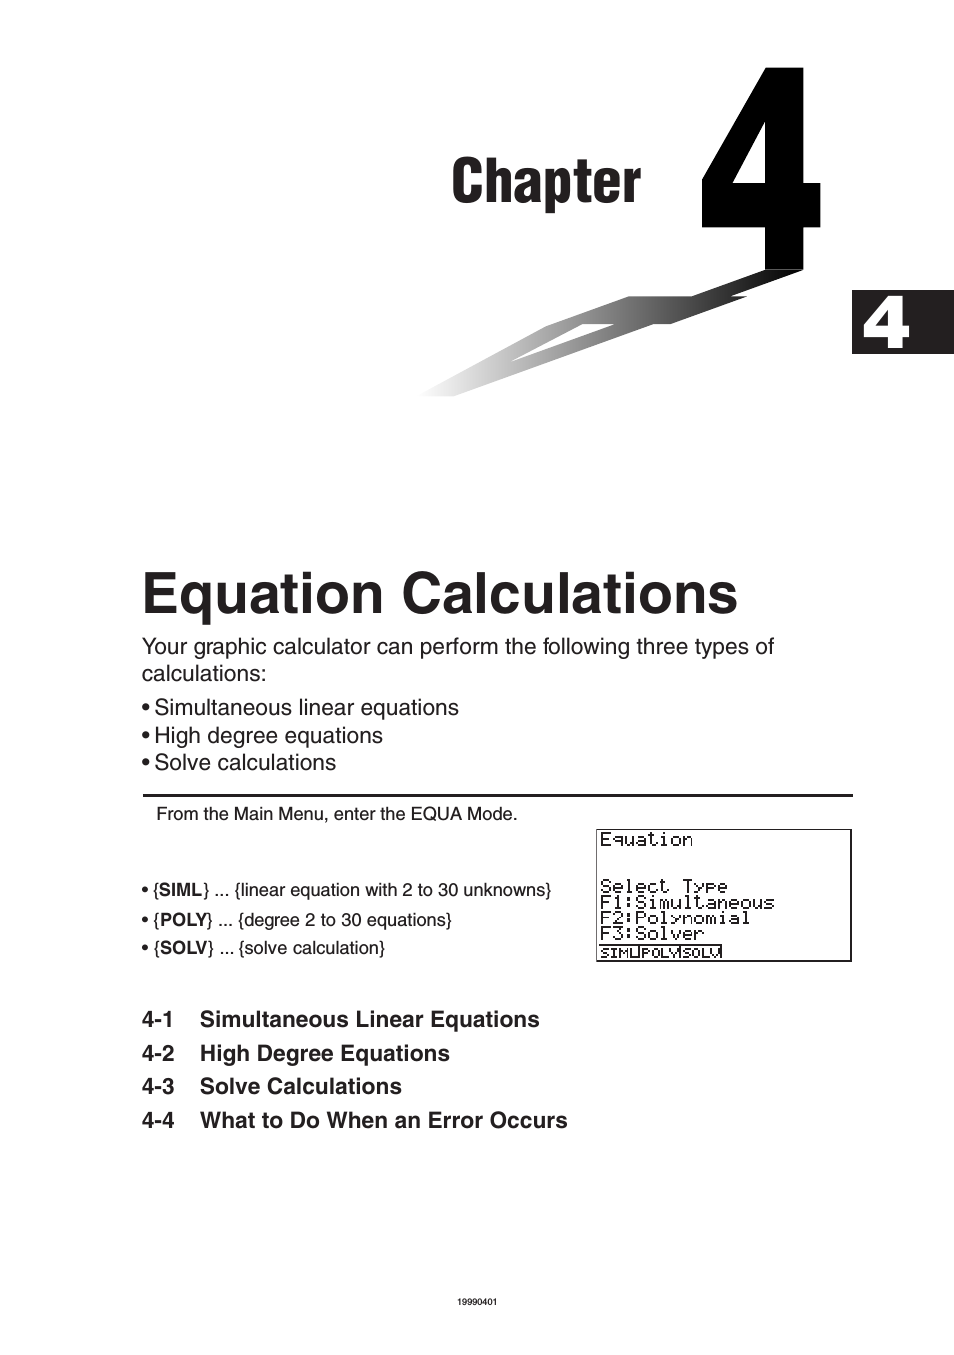 ALGEBRA FX 2.0 PLUS Equation Calculations